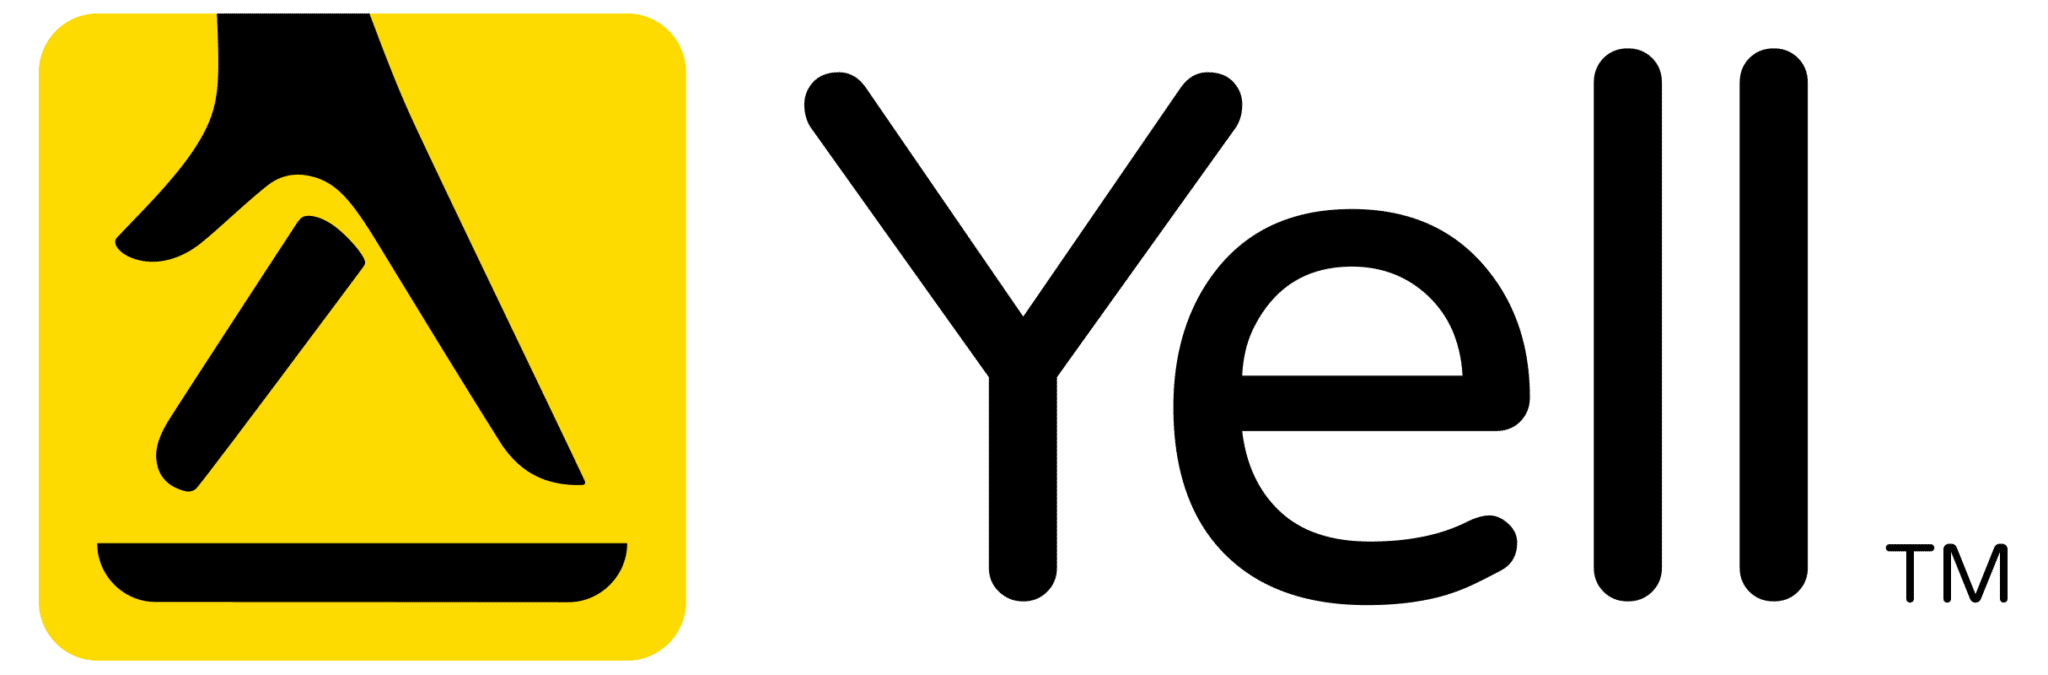 Yell_Logo_2016